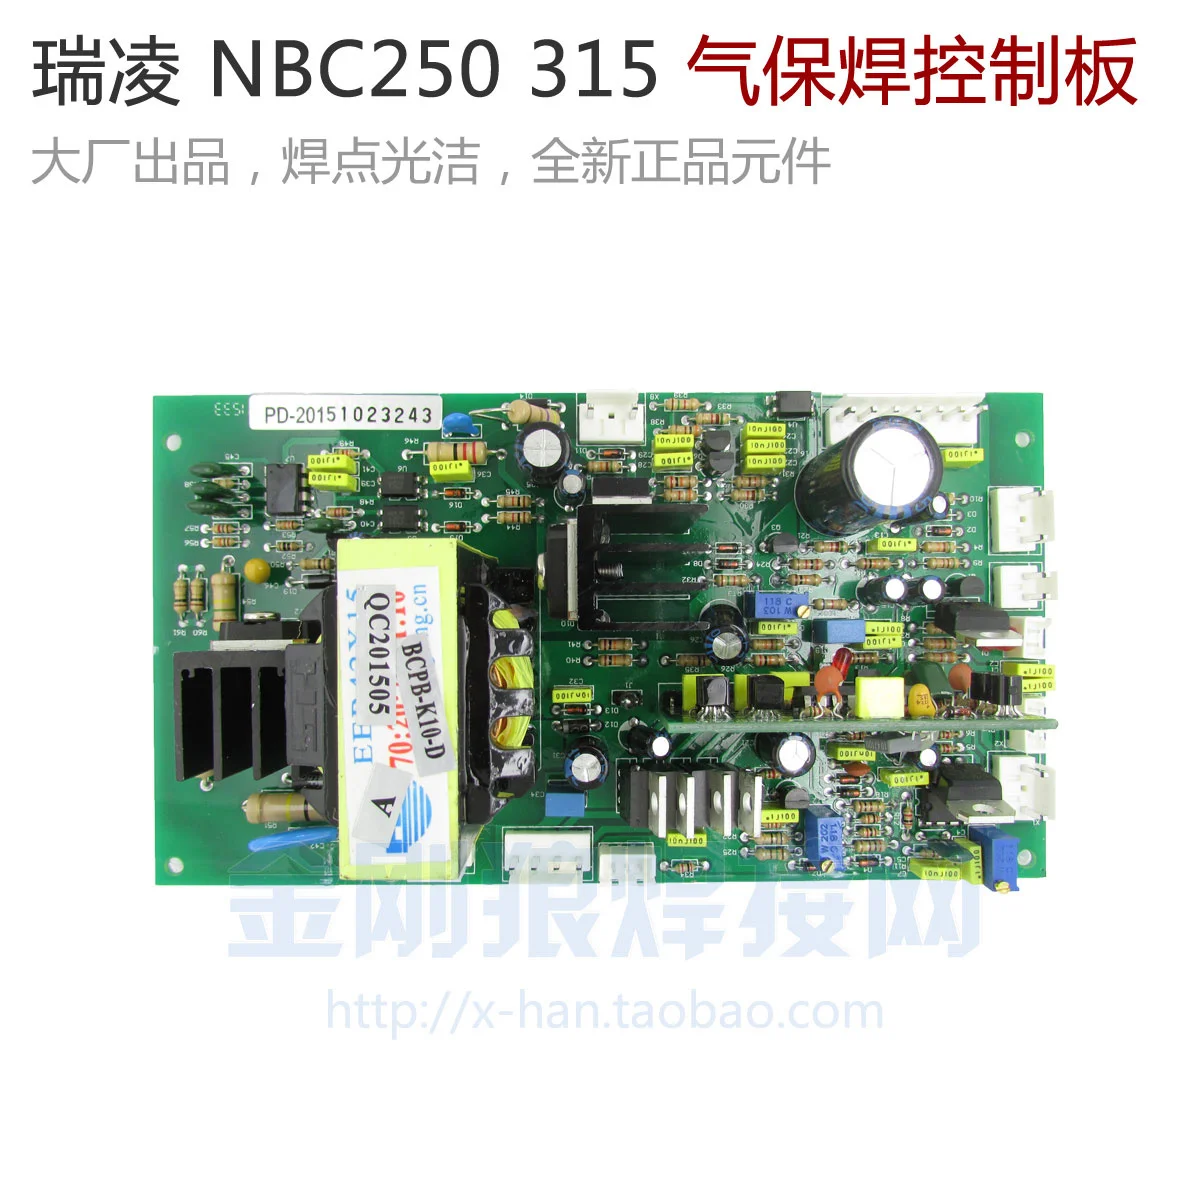 NBC250 315 MOS invertör karbon dioksit gazı kaynakçı kontrol paneli devre